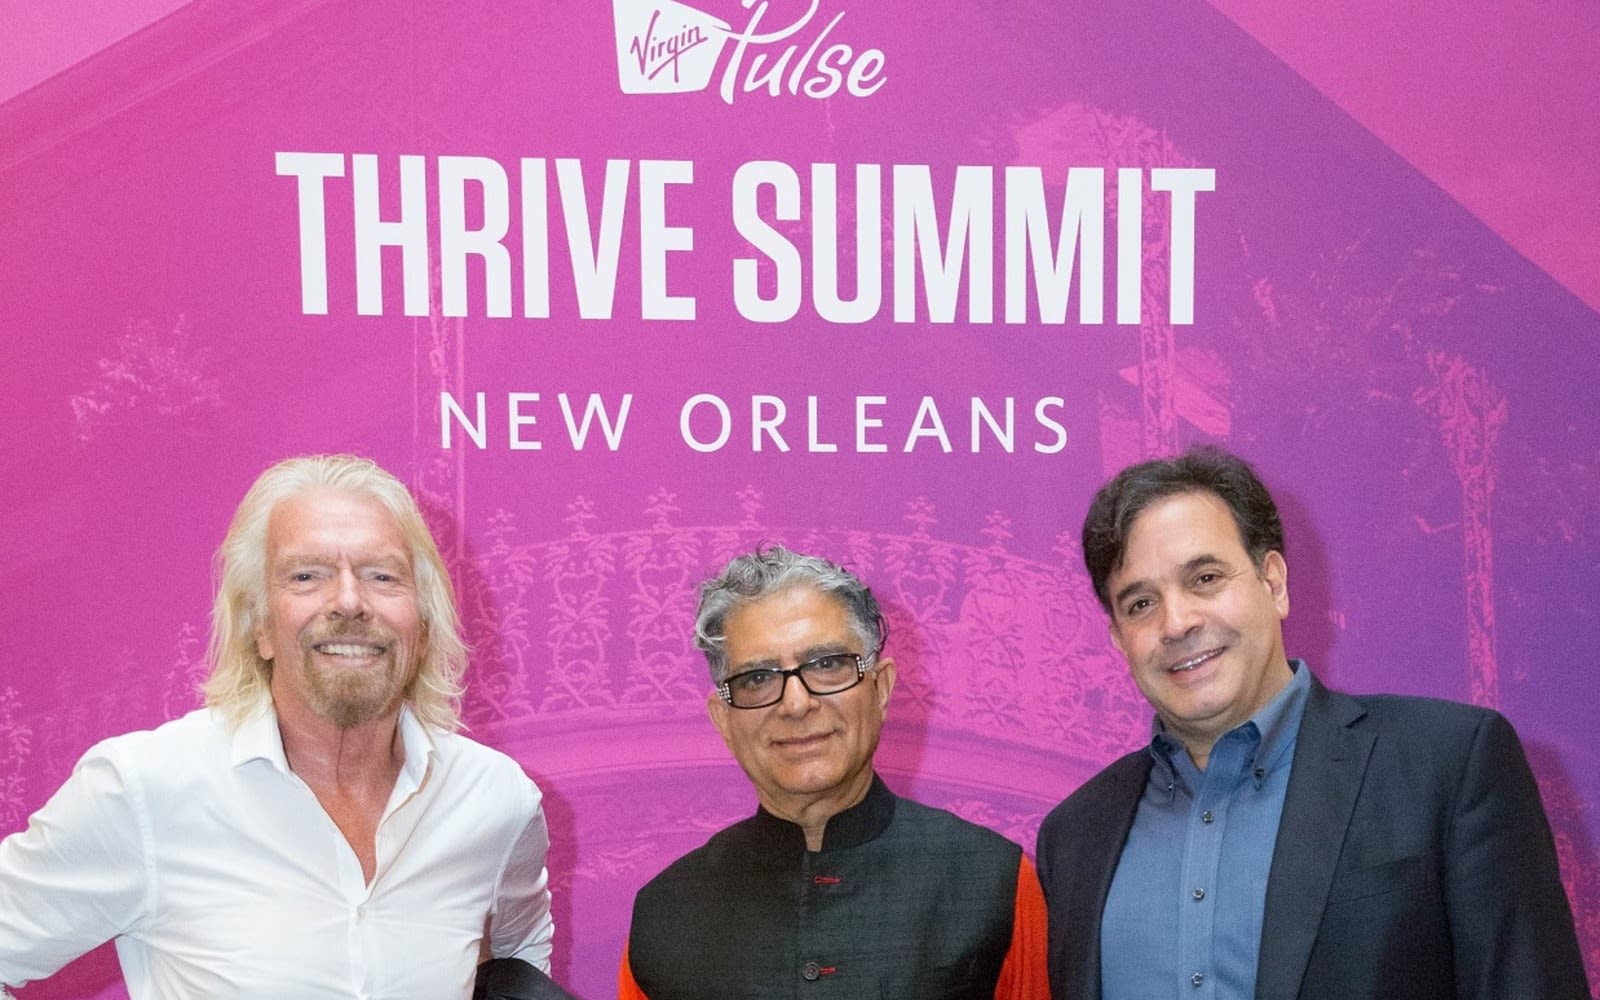 Richard Branson at the Virgin Pulse Thrive Summit in New Orleans with Deepak Chopra